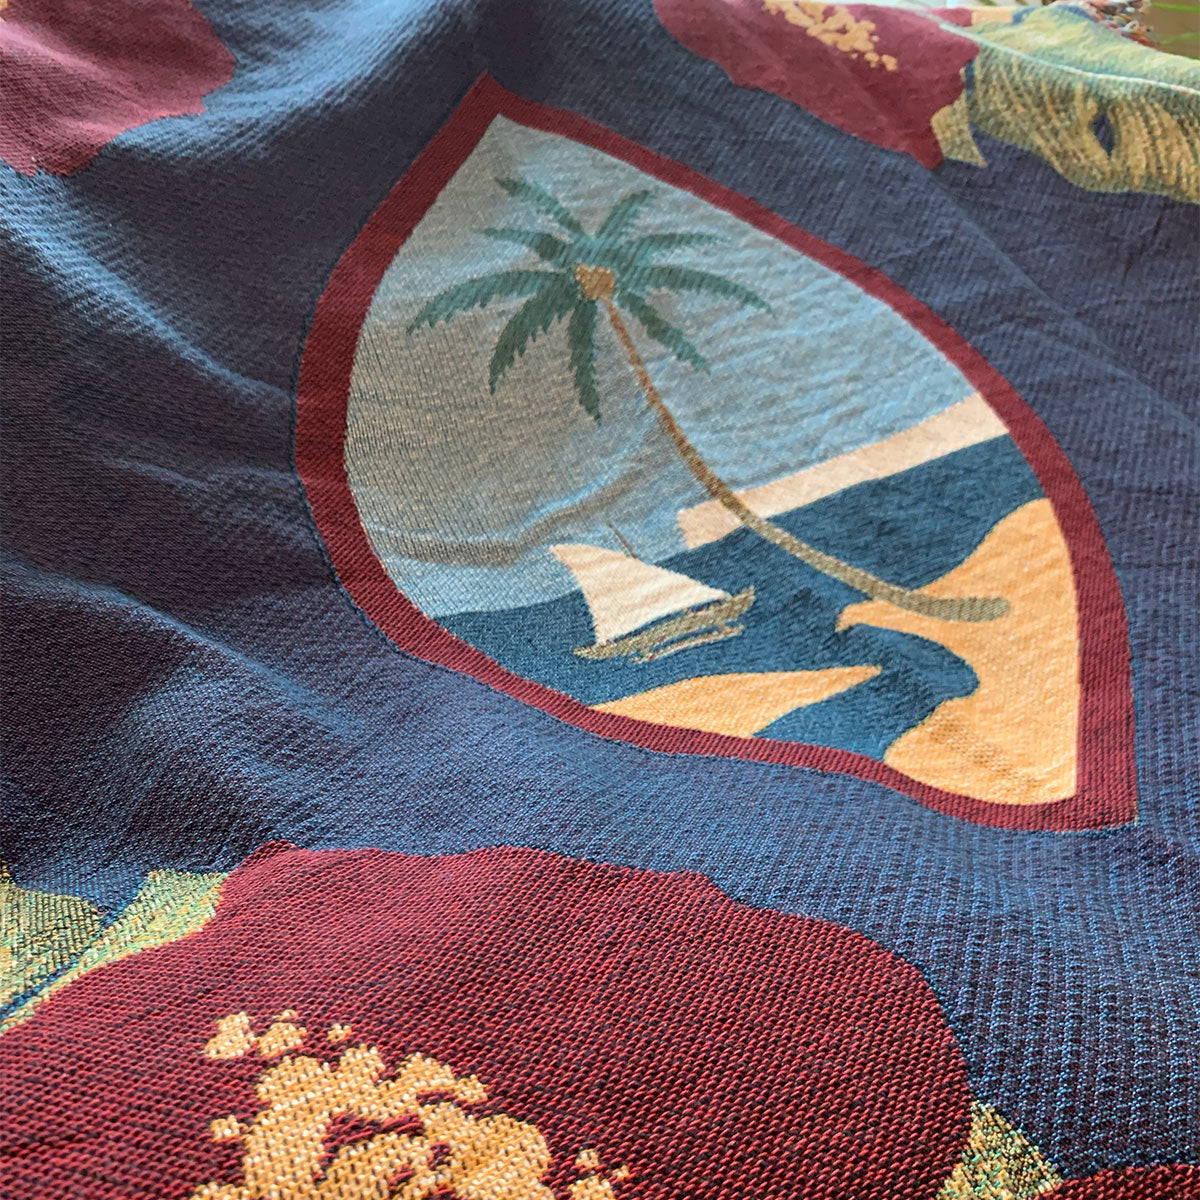 Guam Seal Hibiscus Paradise Woven Blanket